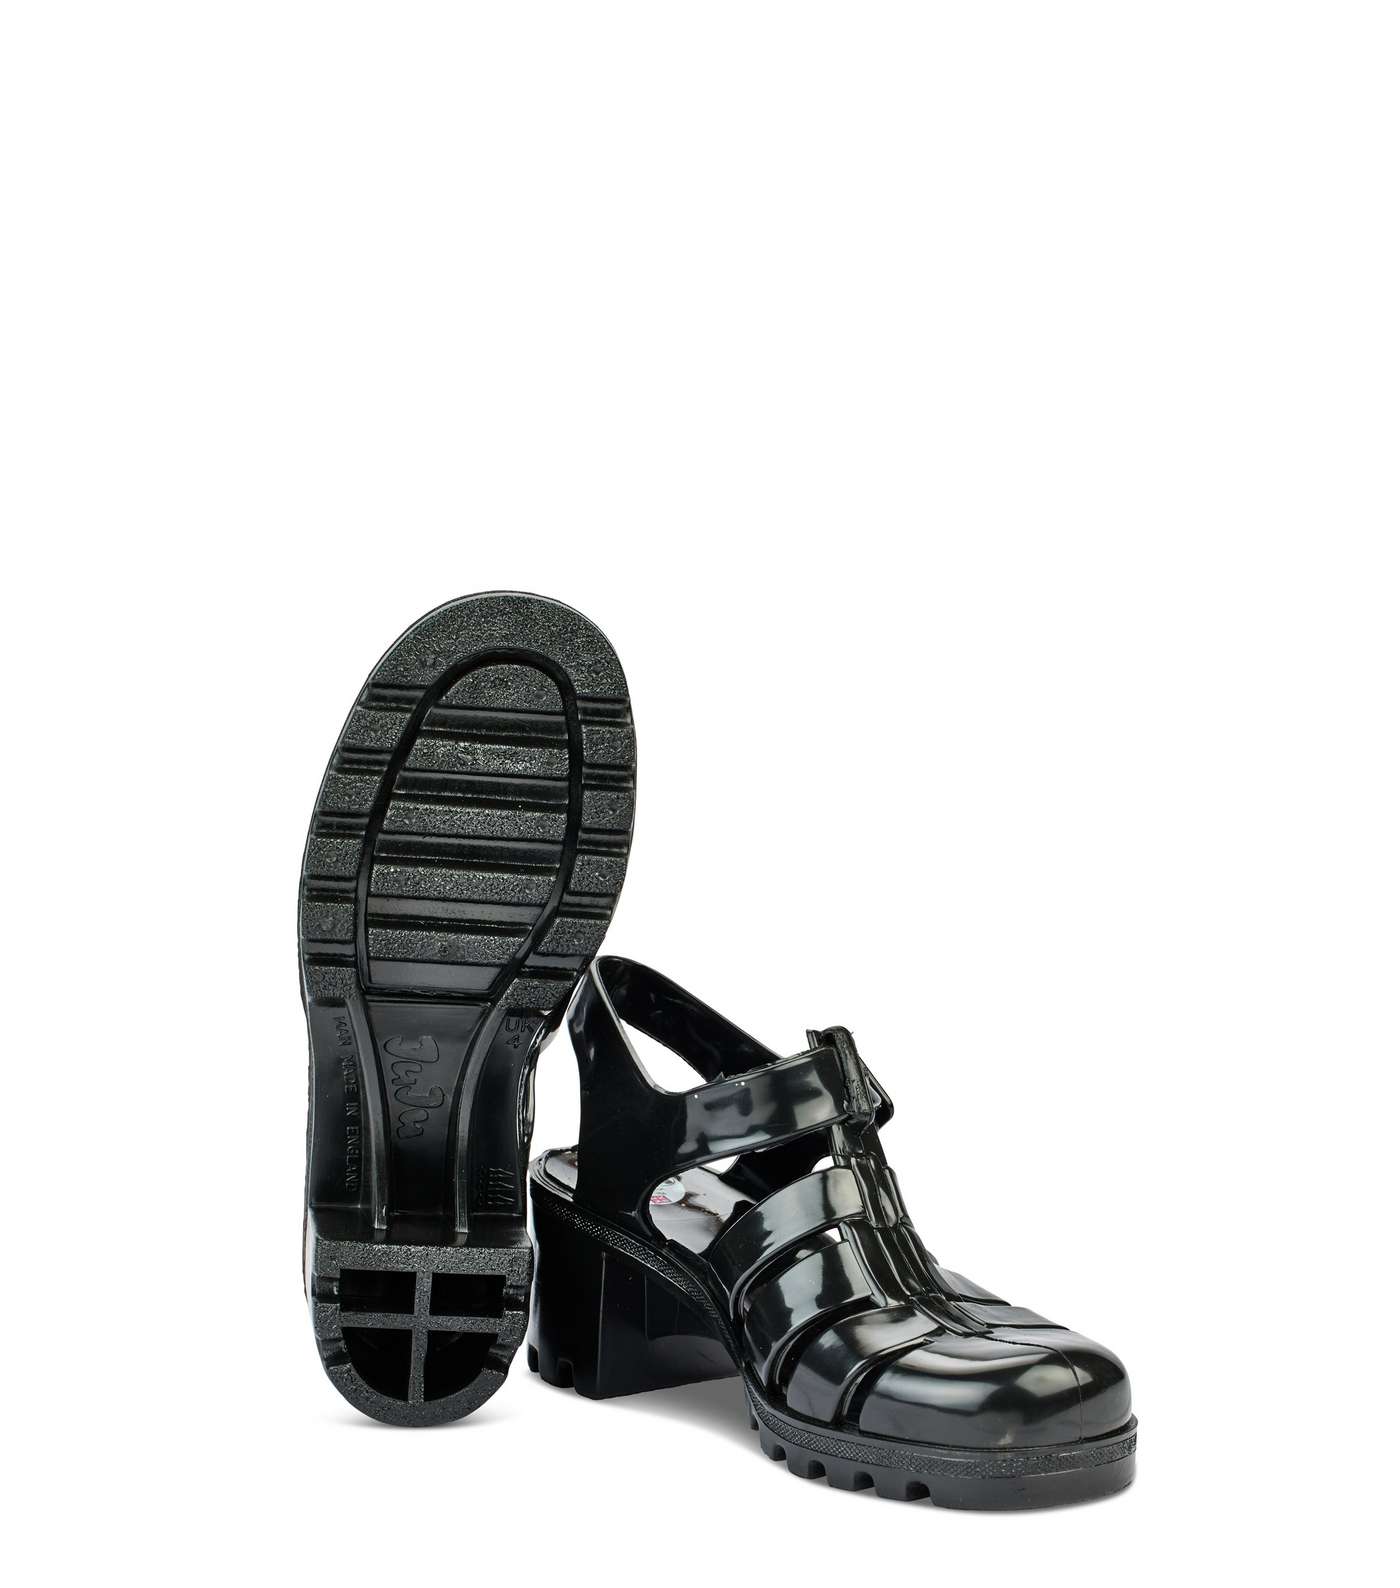 JUJU Black Chunky Jelly Heel Sandals Image 3